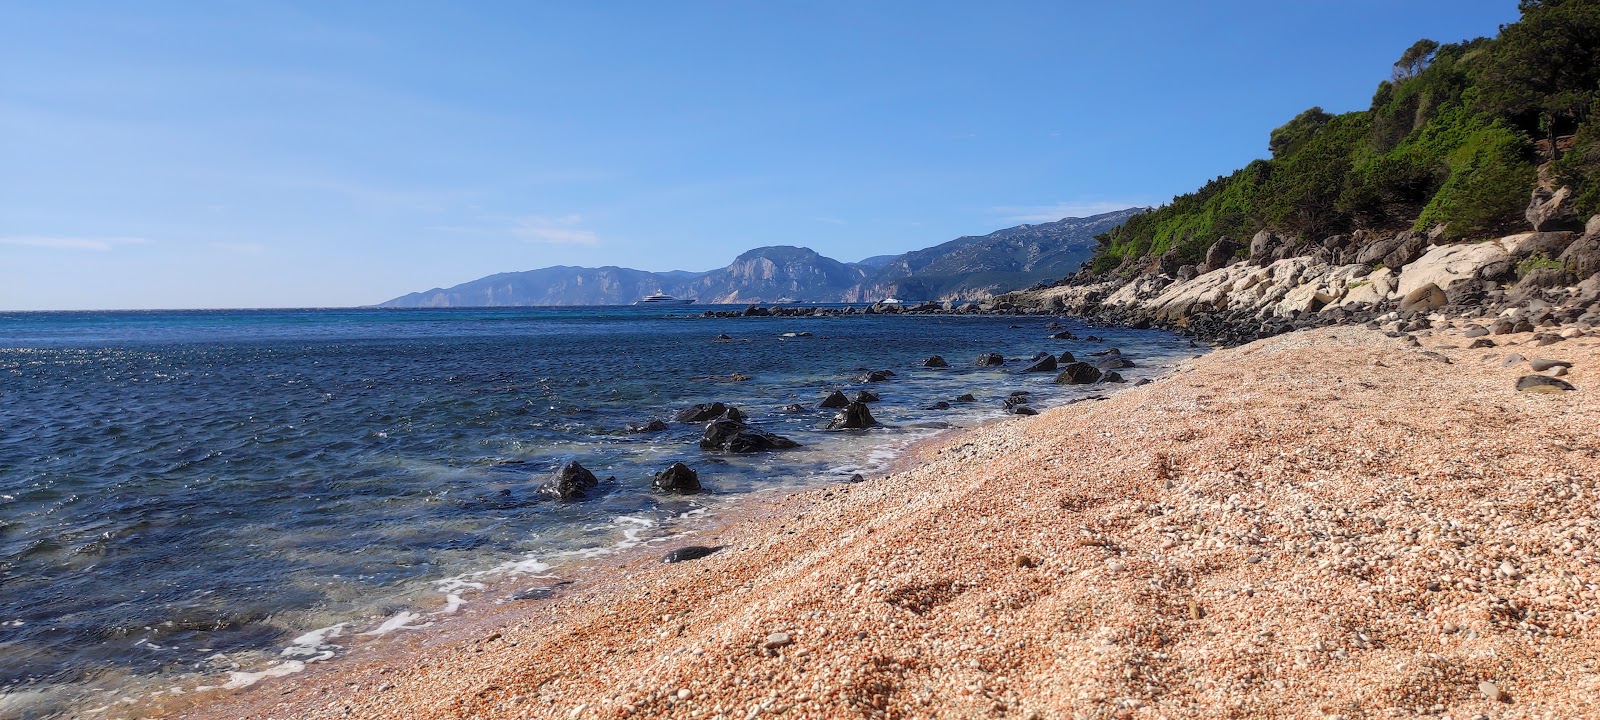 Foto af Spiaggia di S'Abba Meica med lige kyst